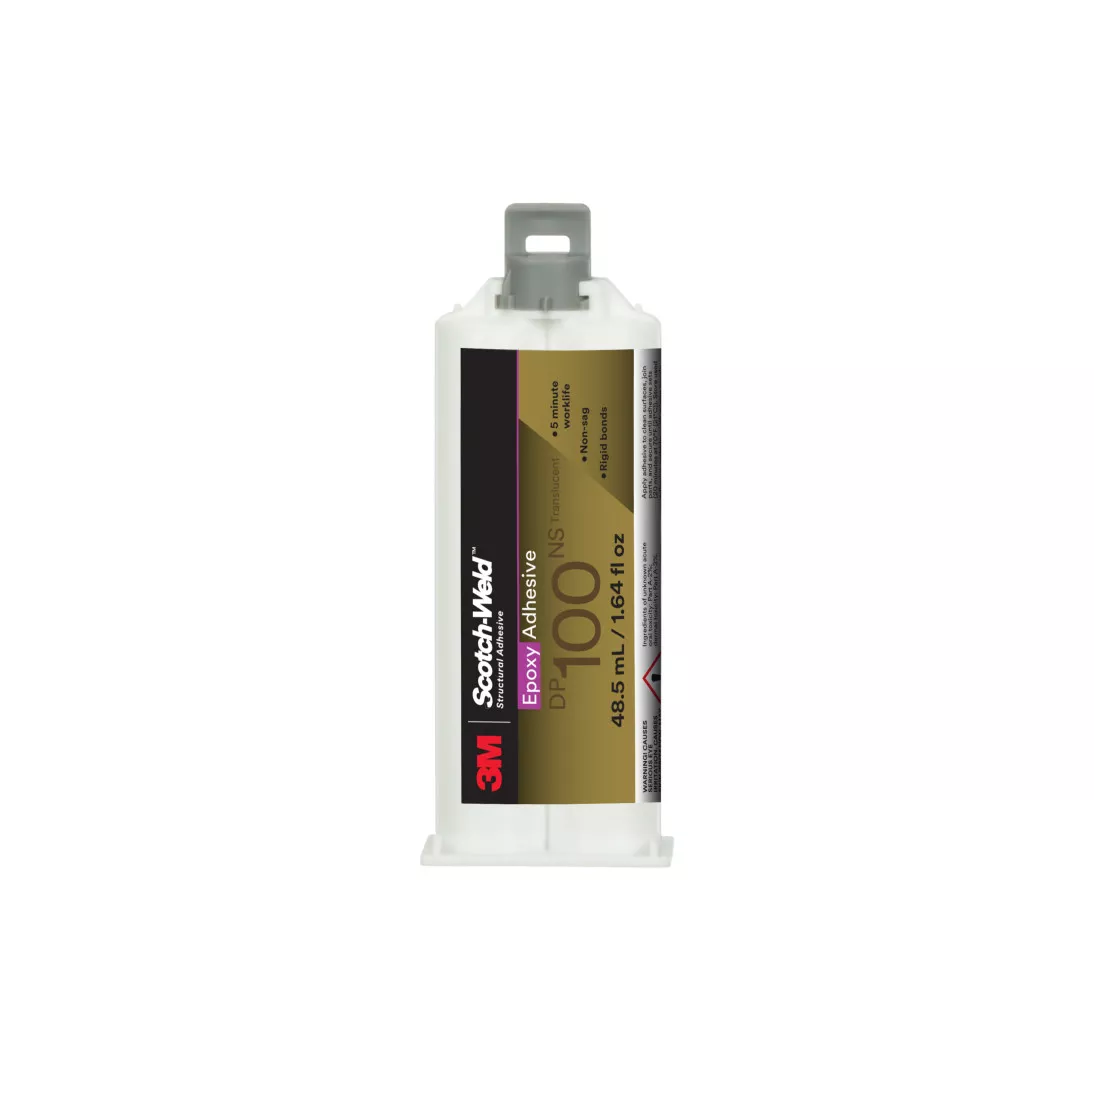 3M™ Scotch-Weld™ Epoxy Adhesive DP100NS, Translucent, 48.5 mL Duo-Pak,
12/case